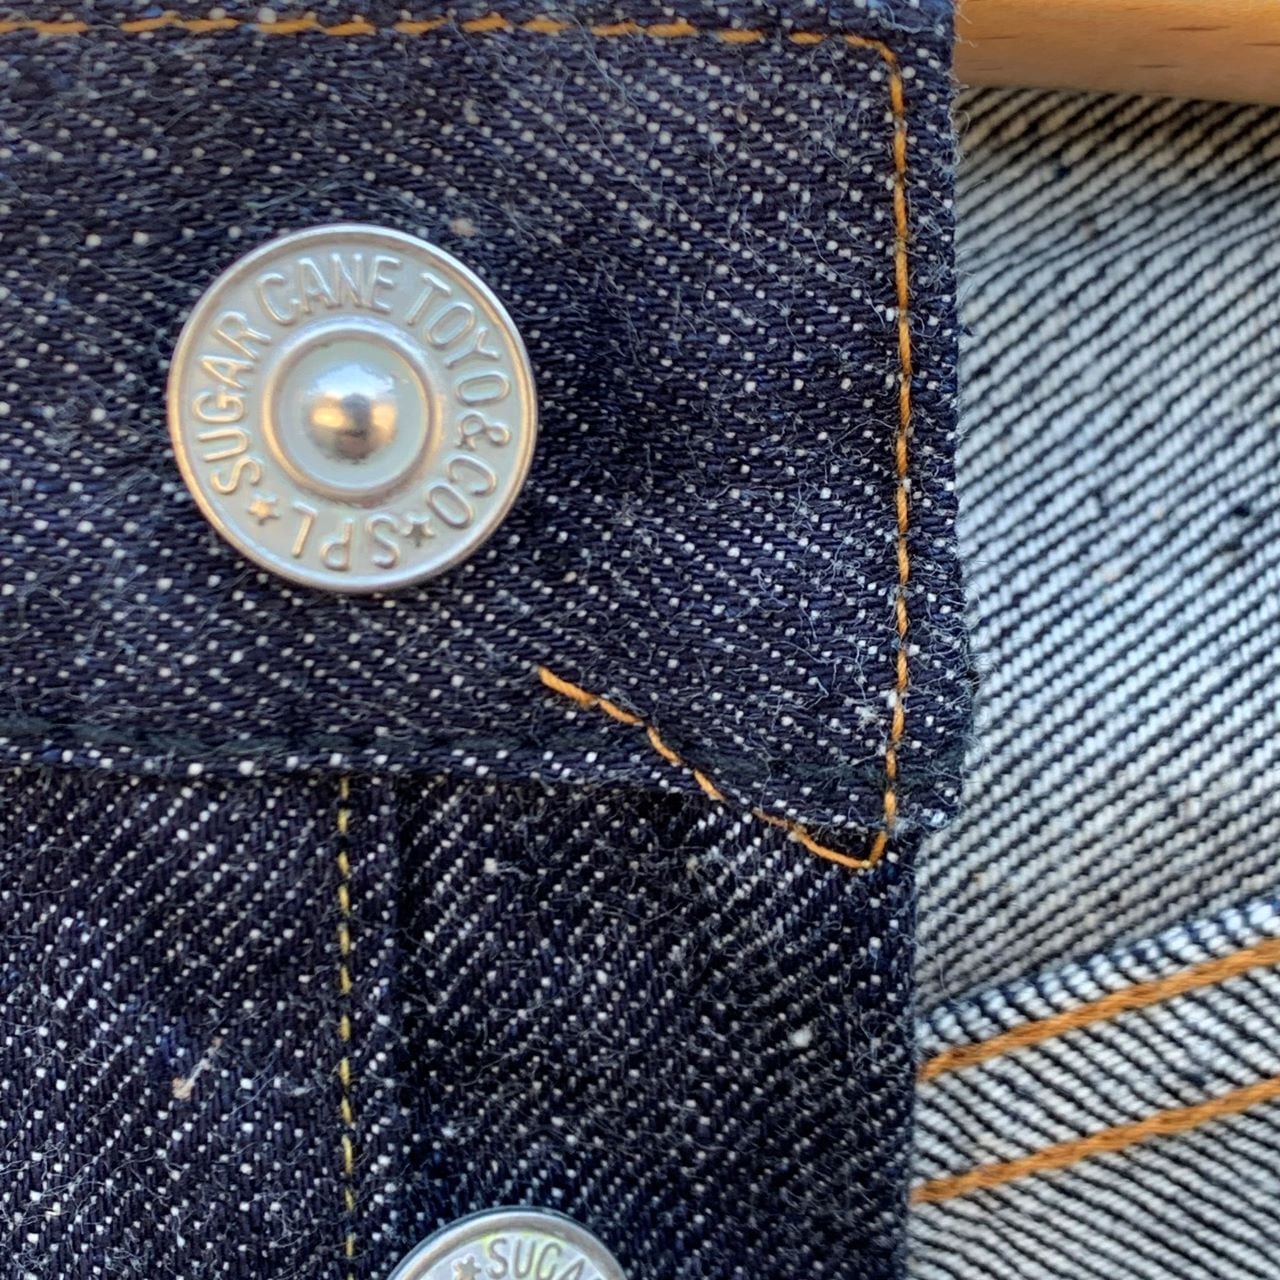 SUGAR CANE 13oz. BLUE DENIM WAIST OVERALLS 1937 MODEL | Jeans Shop ...